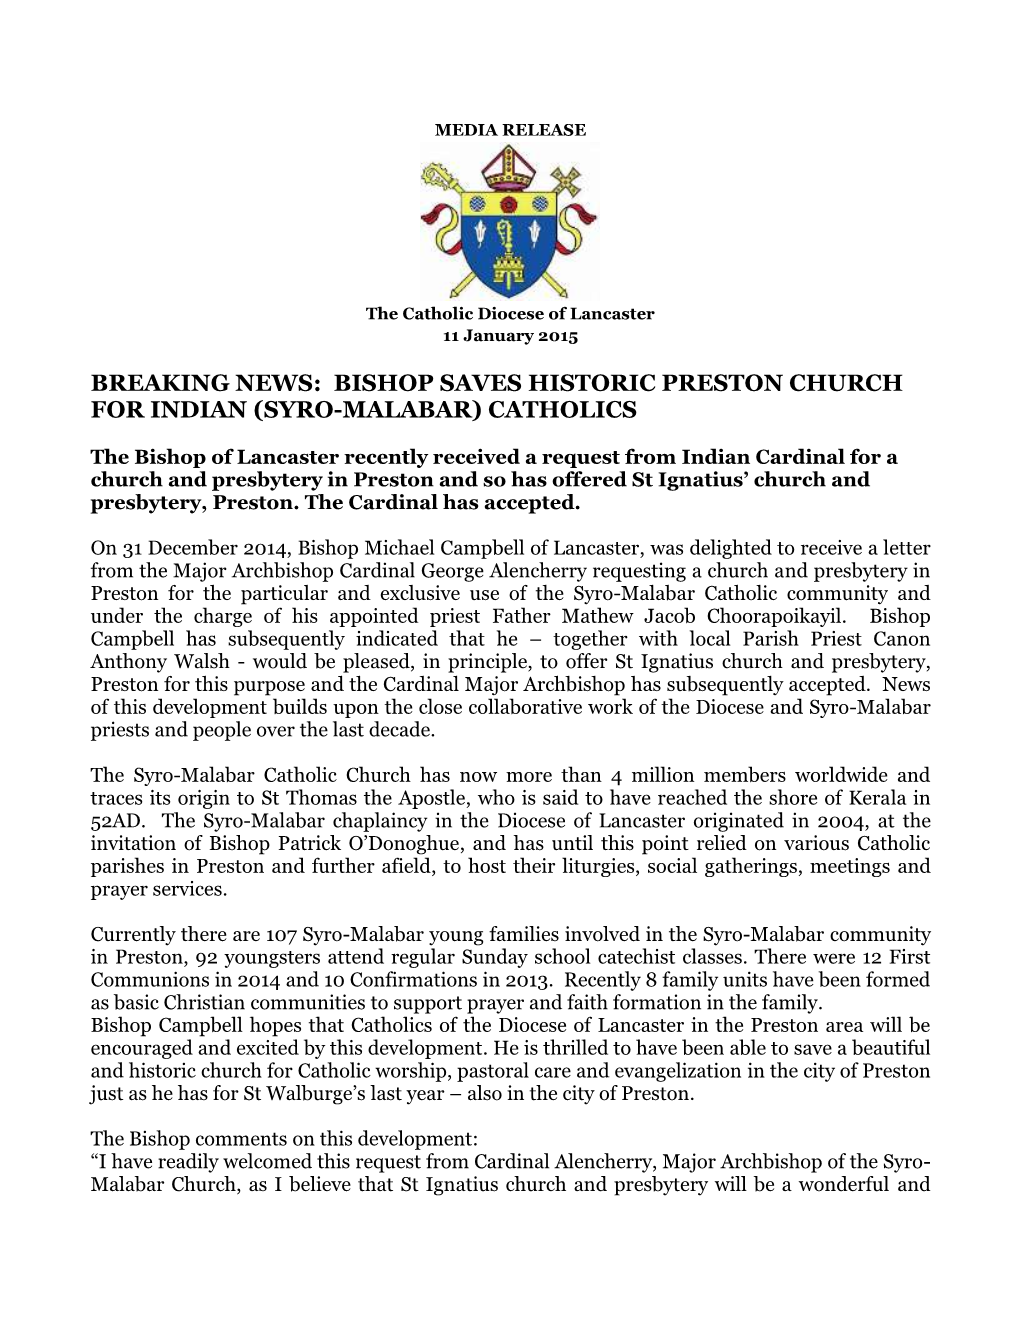 Bishop Saves Historic Preston Church for Indian (Syro-Malabar) Catholics